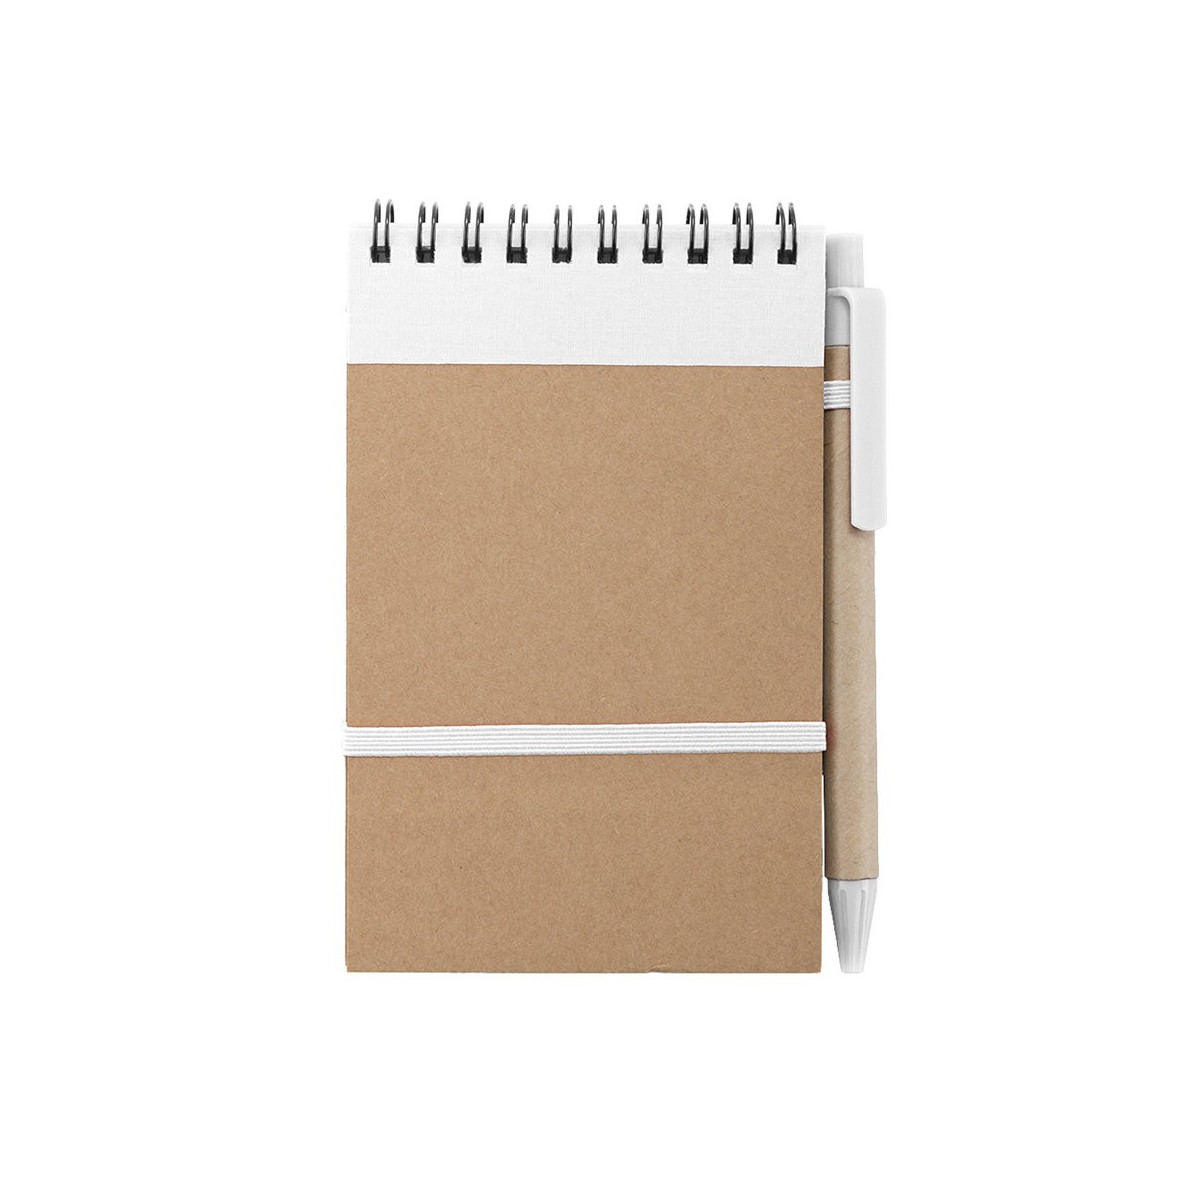 Ecocard notebook branco